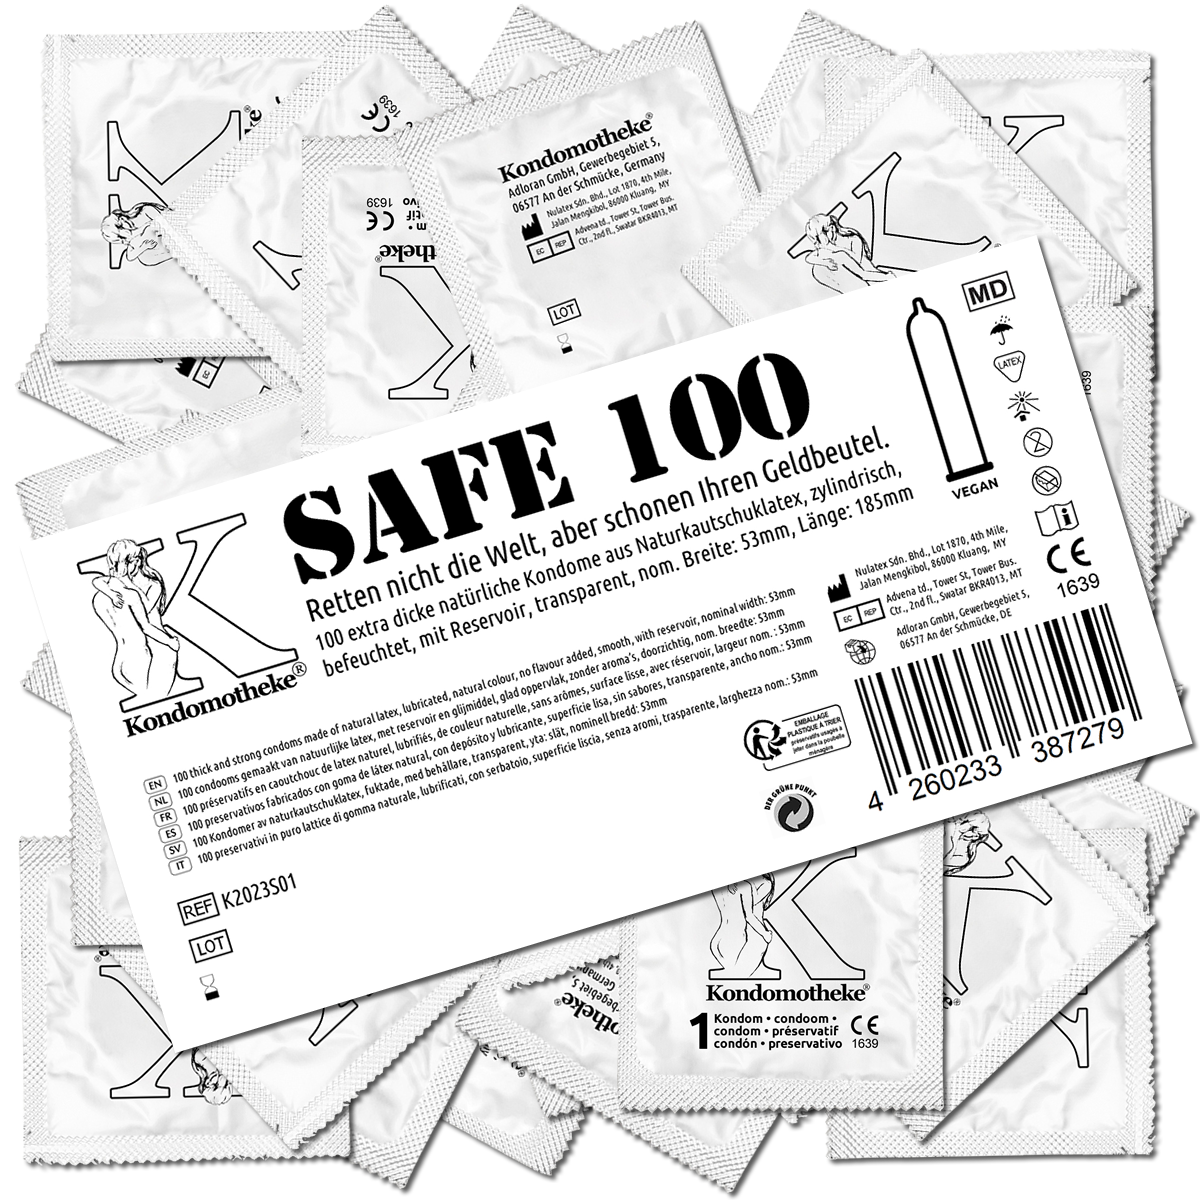 Kondomotheke «SAFE» 100 durable condoms for every position - the inexpensive premium condoms 